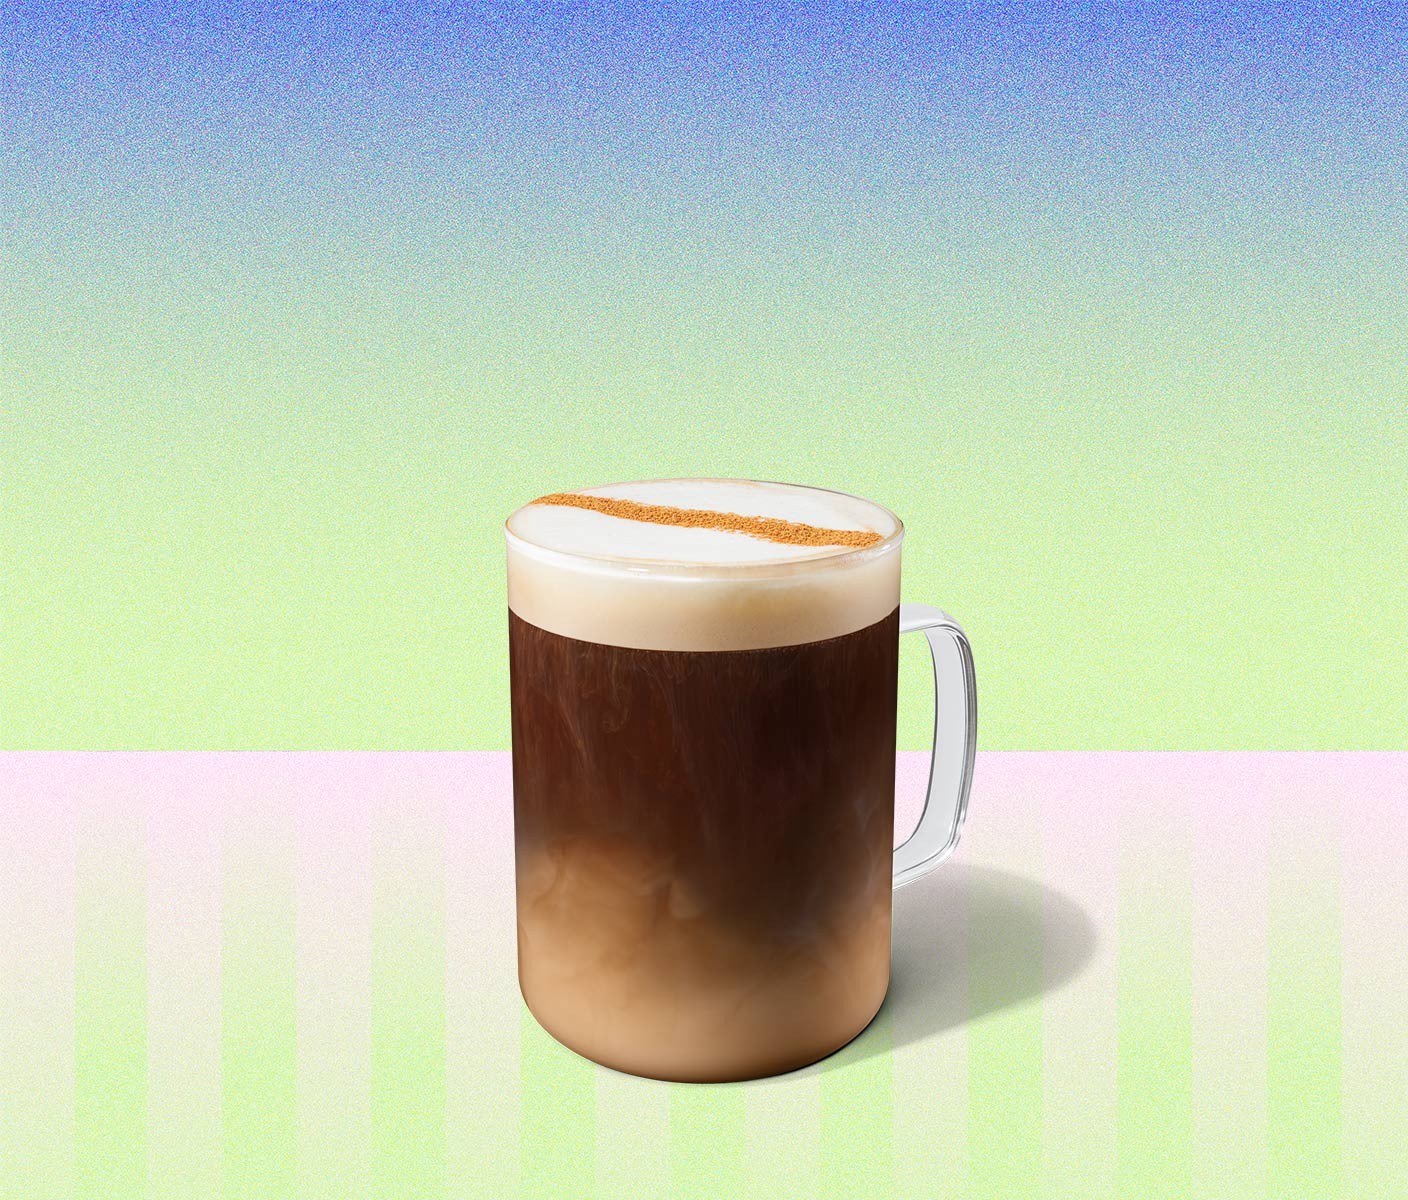 Hot coffee drink with a strike of cinnamon in a glass mug